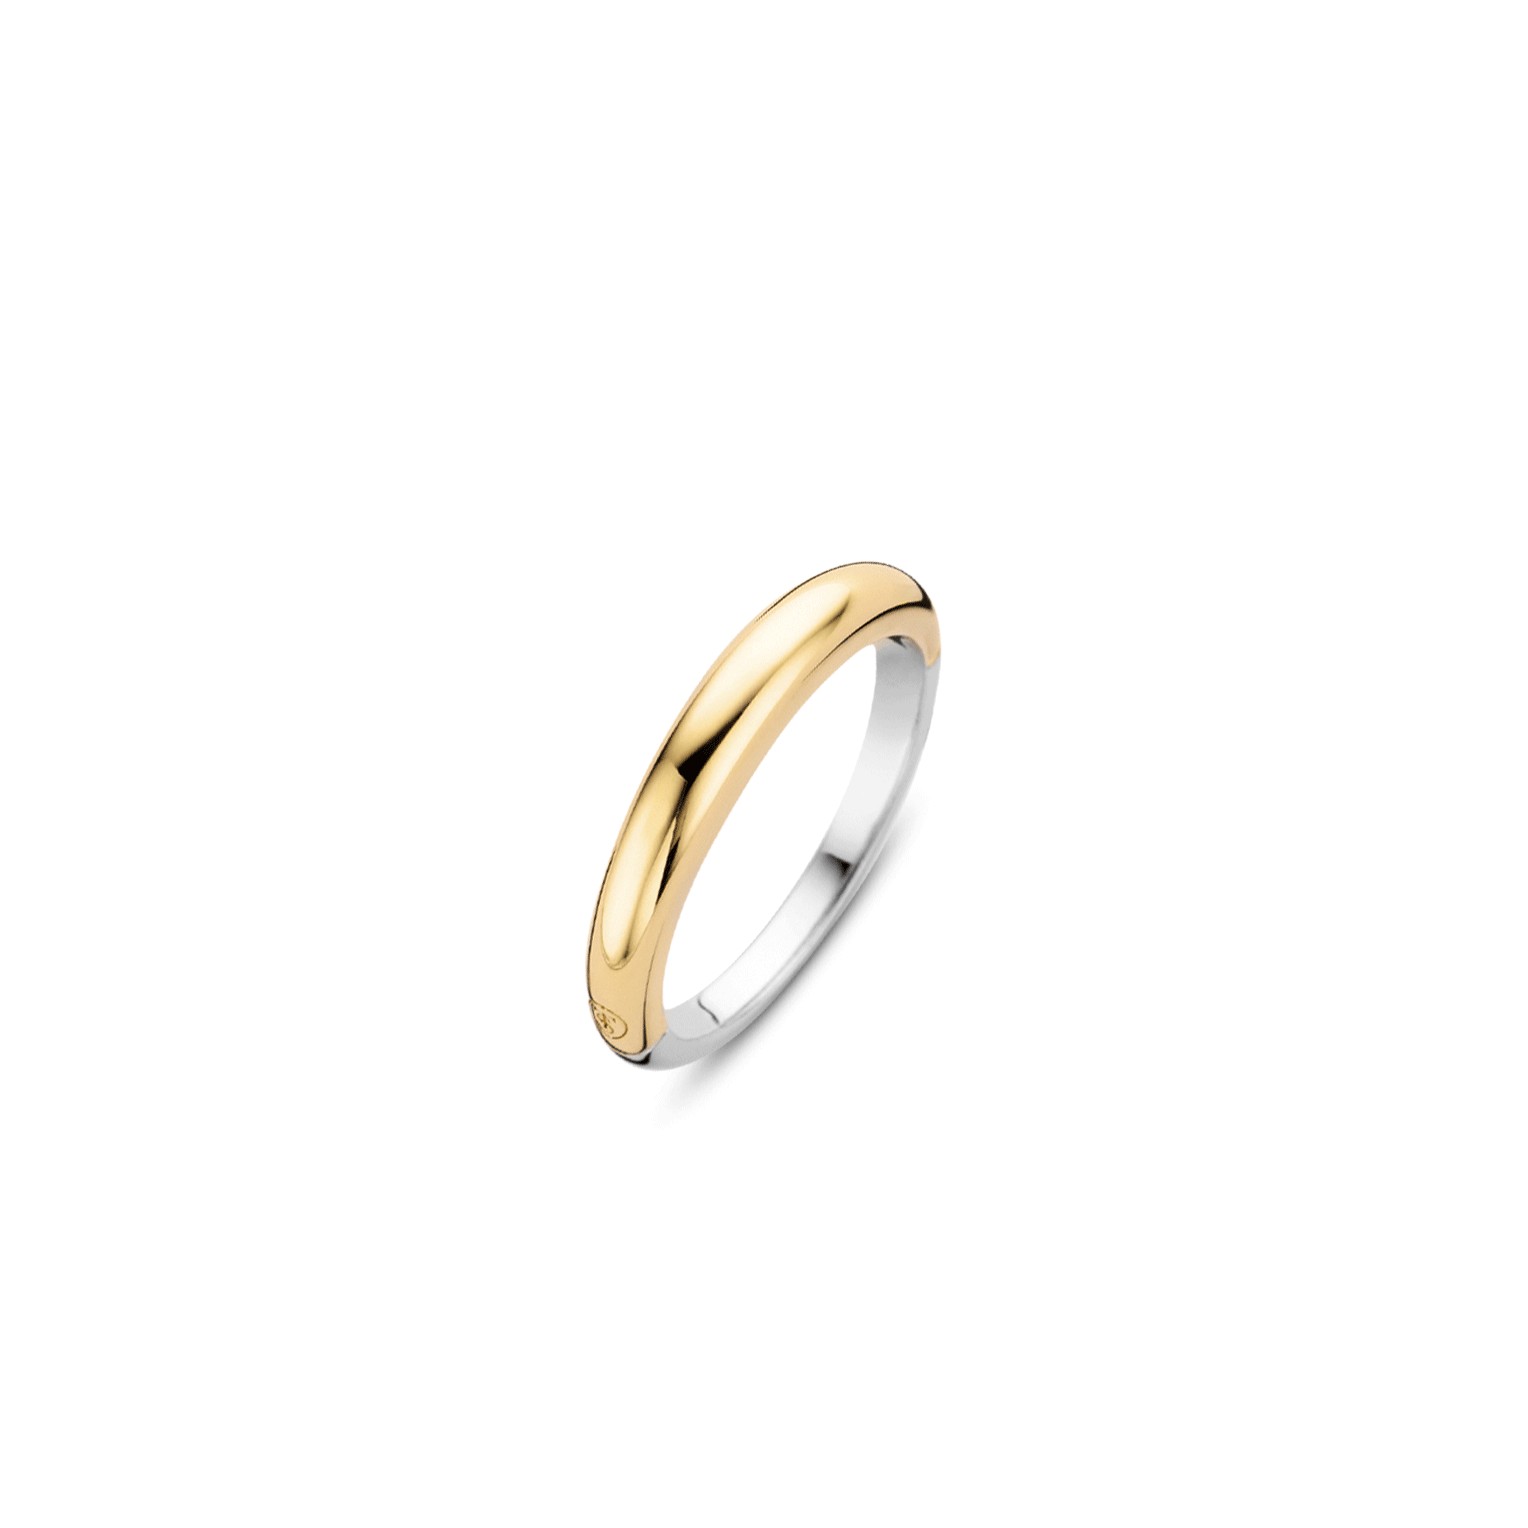 TI SENTO - Milano Ring 12104SY Gala Jewelers Inc. White Oak, PA